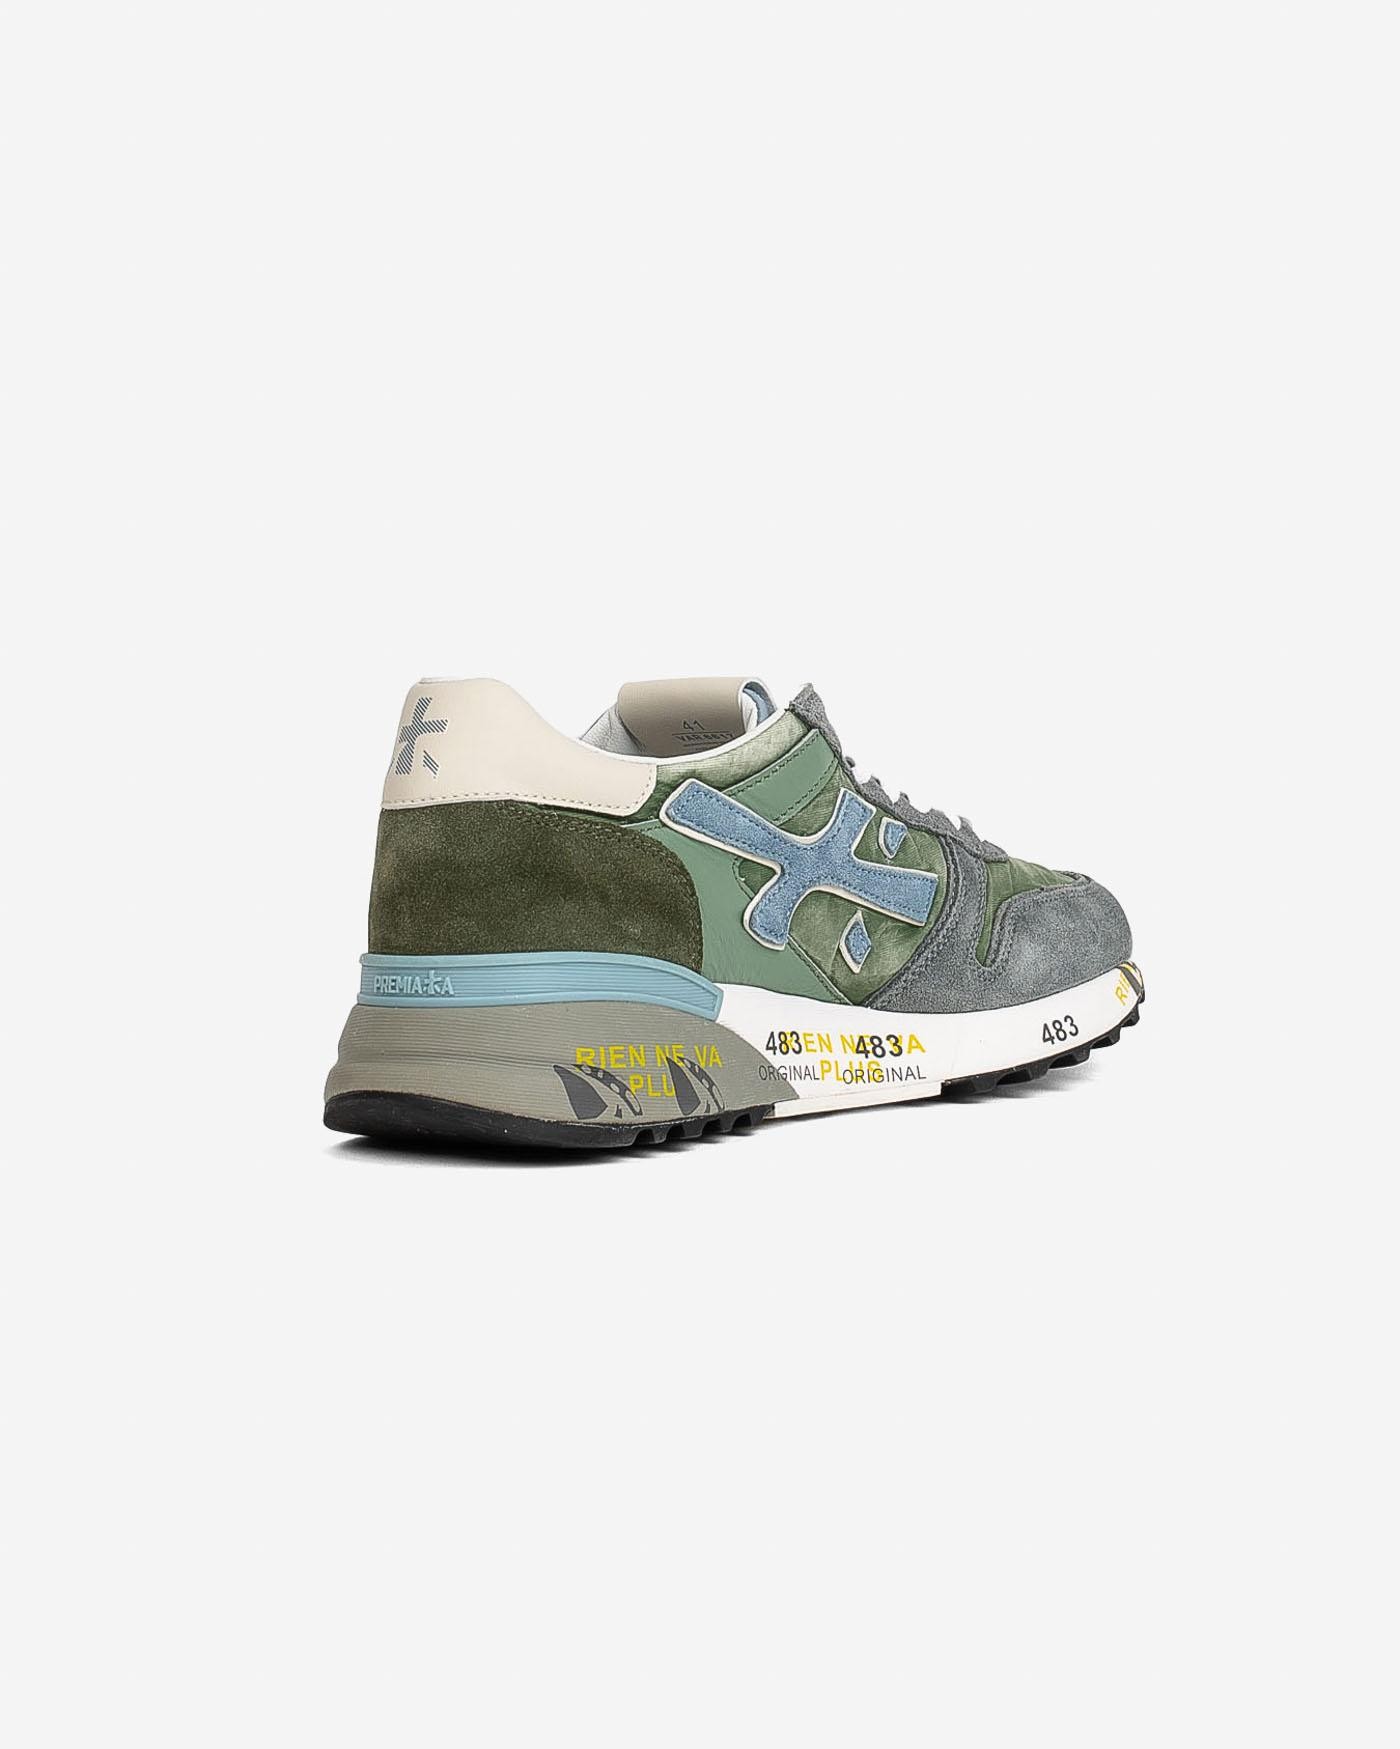 premiata-zapatillas-mick-var-6617-sneakers-green-verdes-2